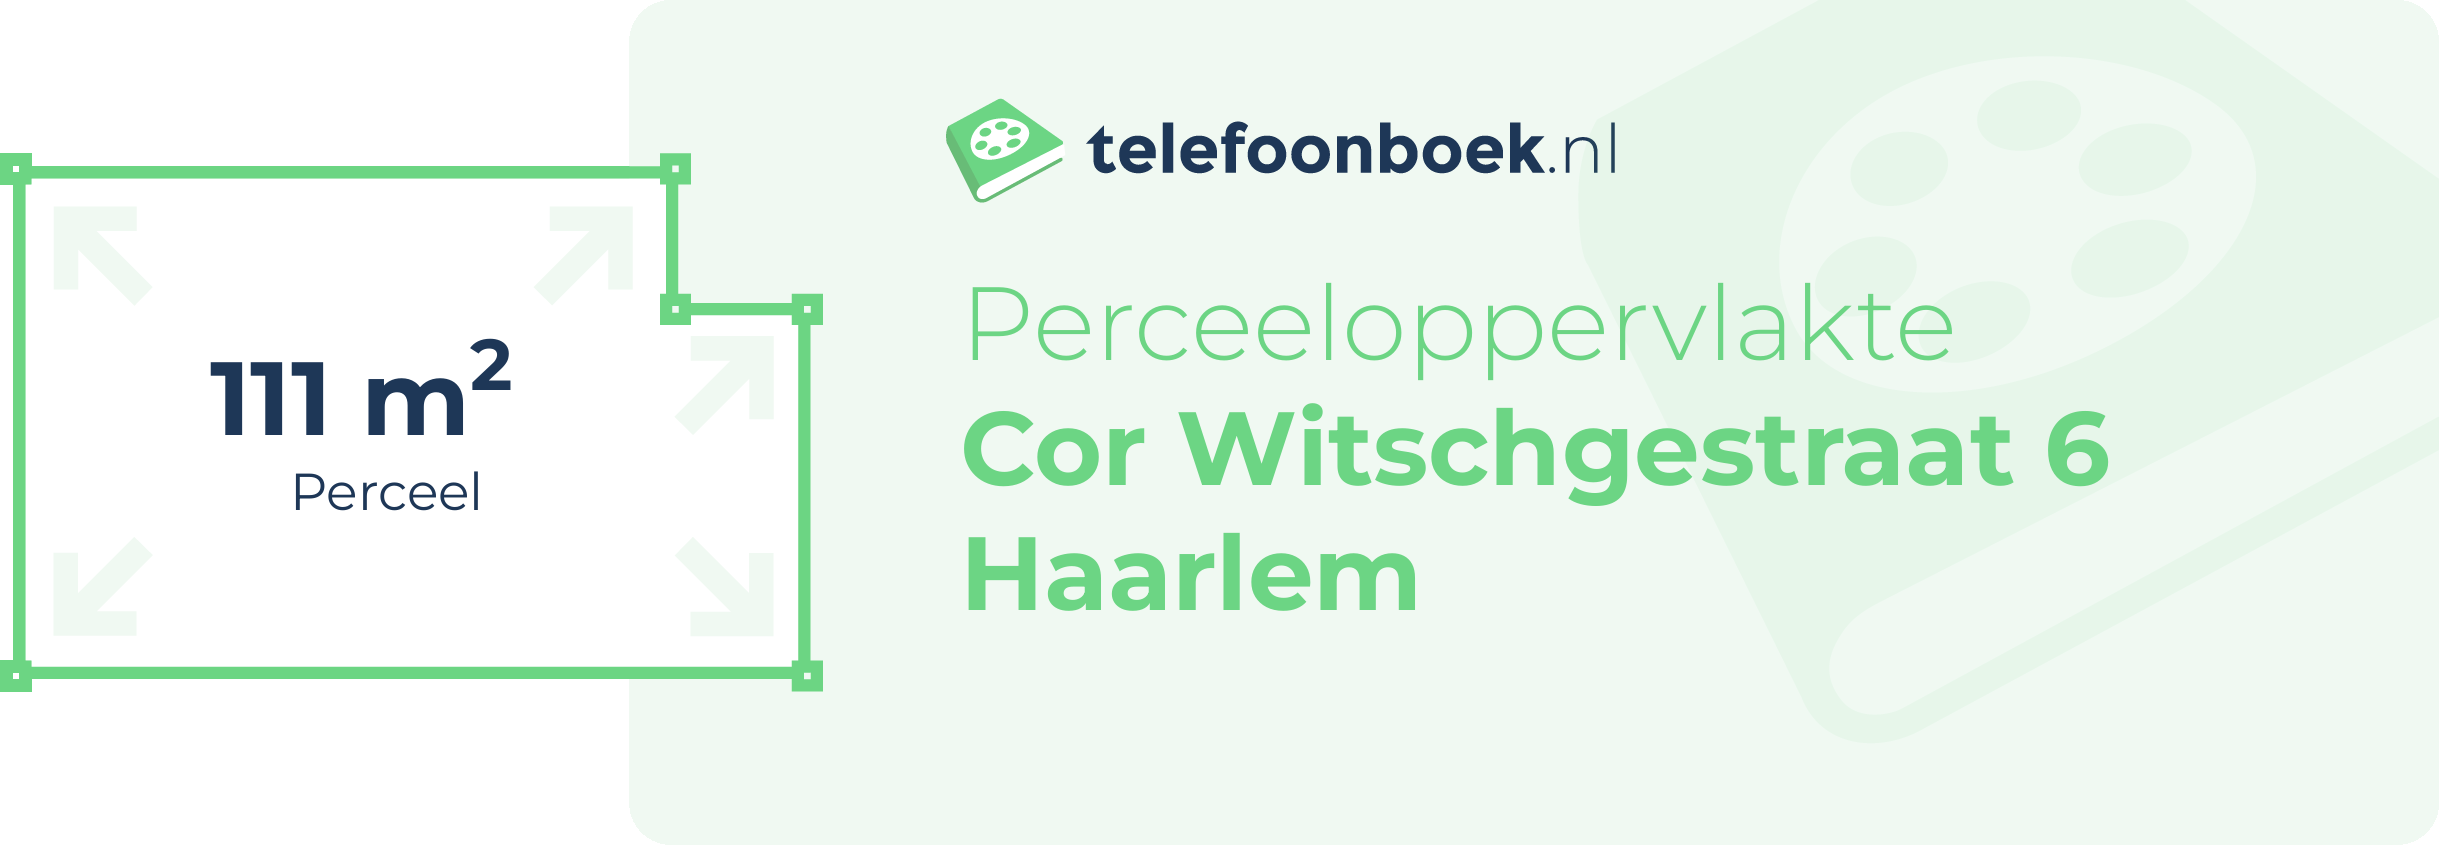 Perceeloppervlakte Cor Witschgestraat 6 Haarlem